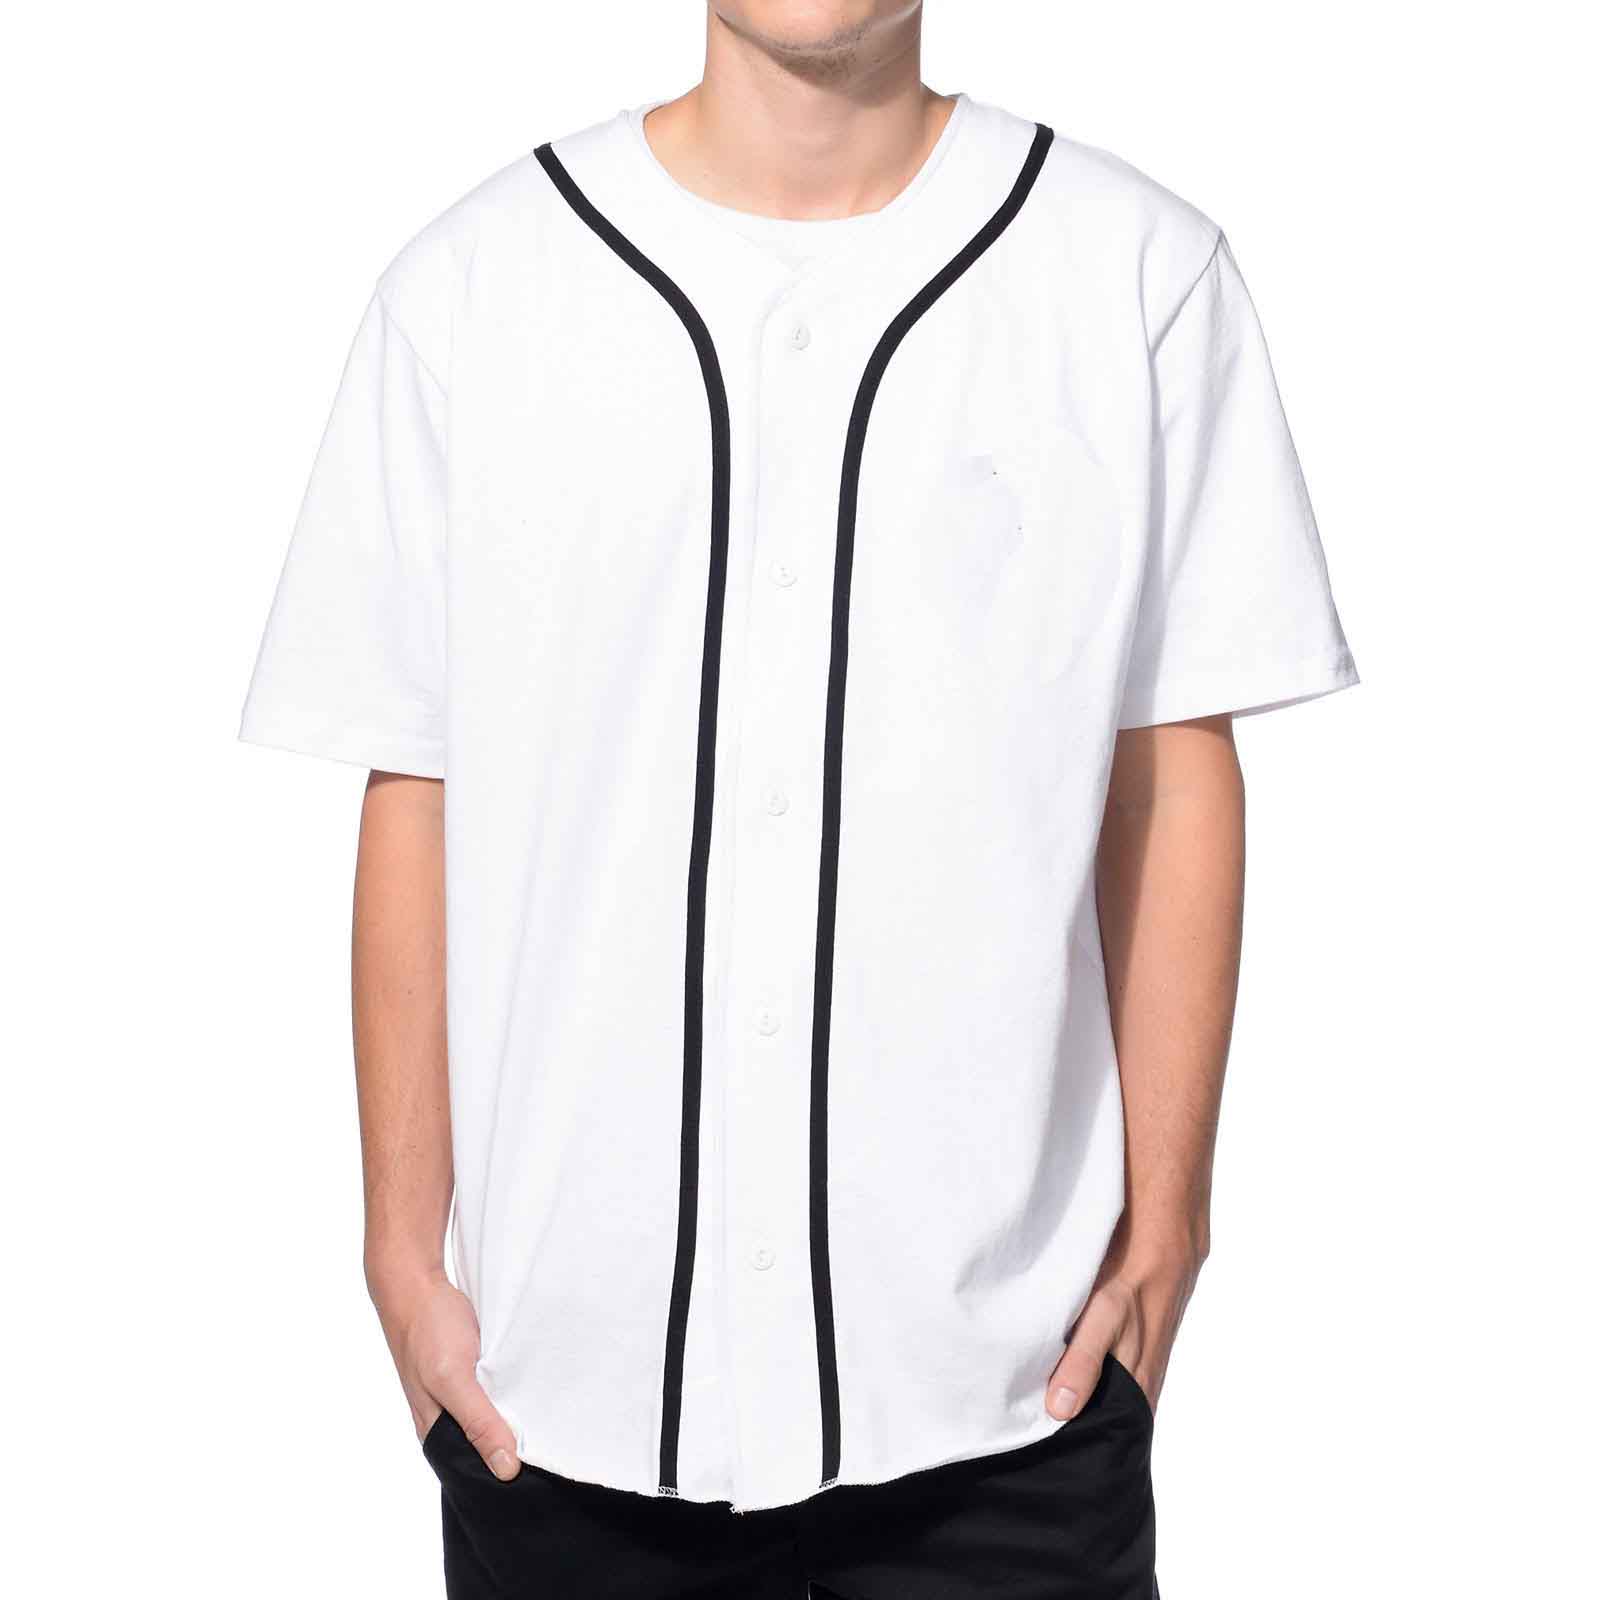 White Baseball Jersey By X Athletic Wear The Best Custom Baseball Jerseys Manufacturer In Pakistan